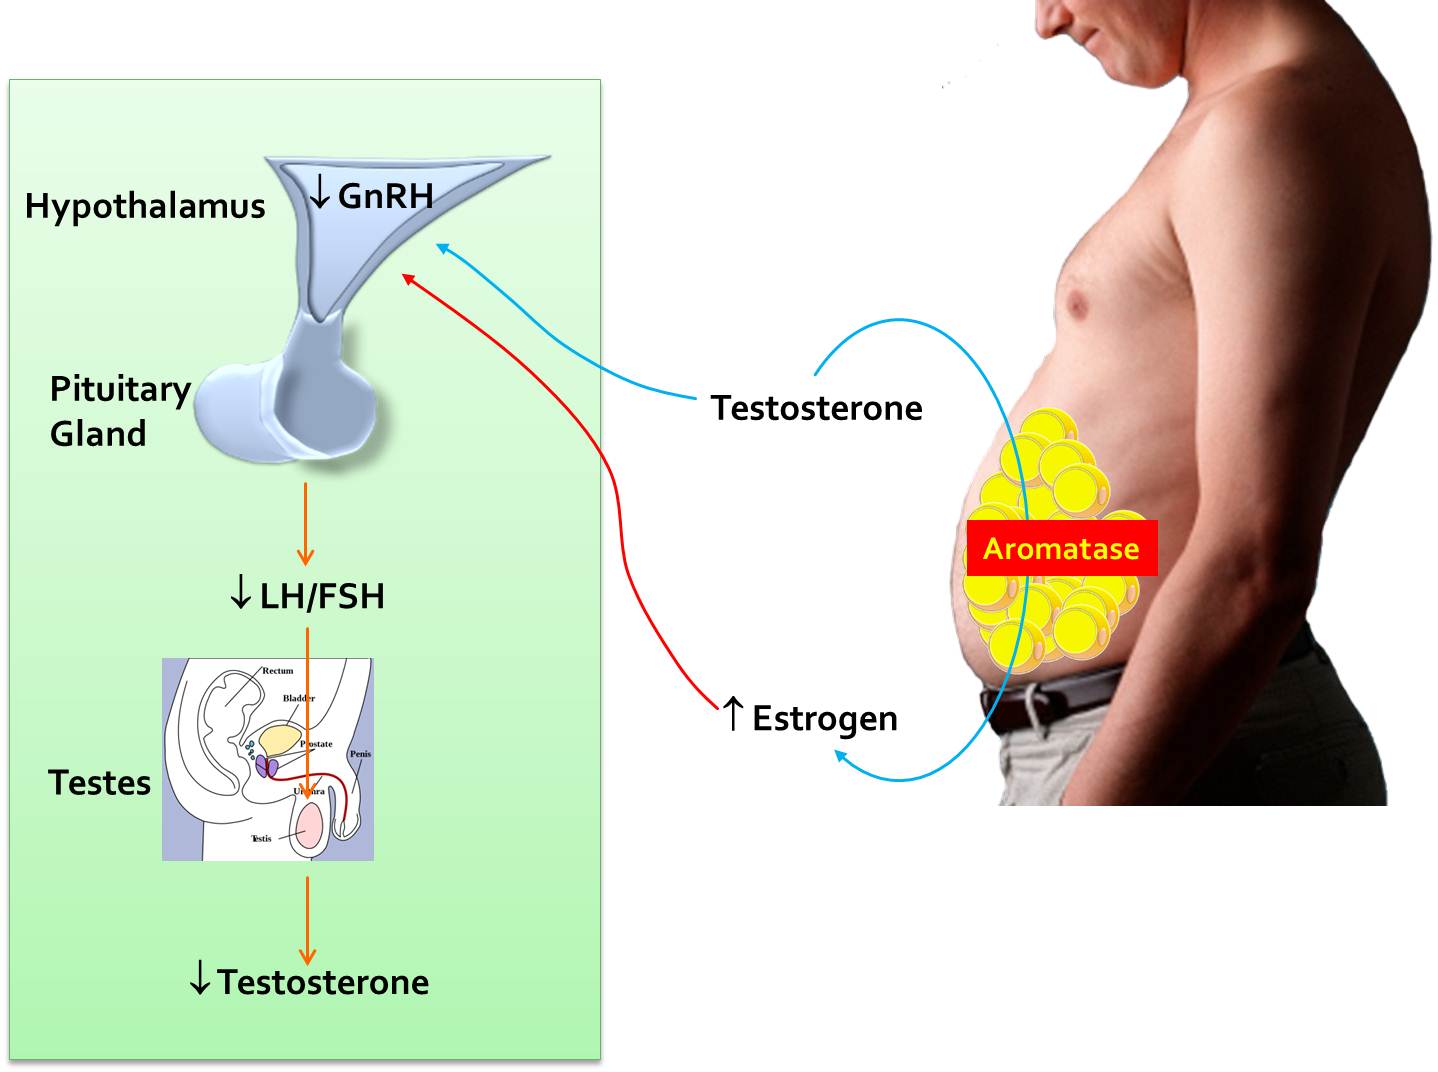 testosterone_aromatase_estrogen_gnrh